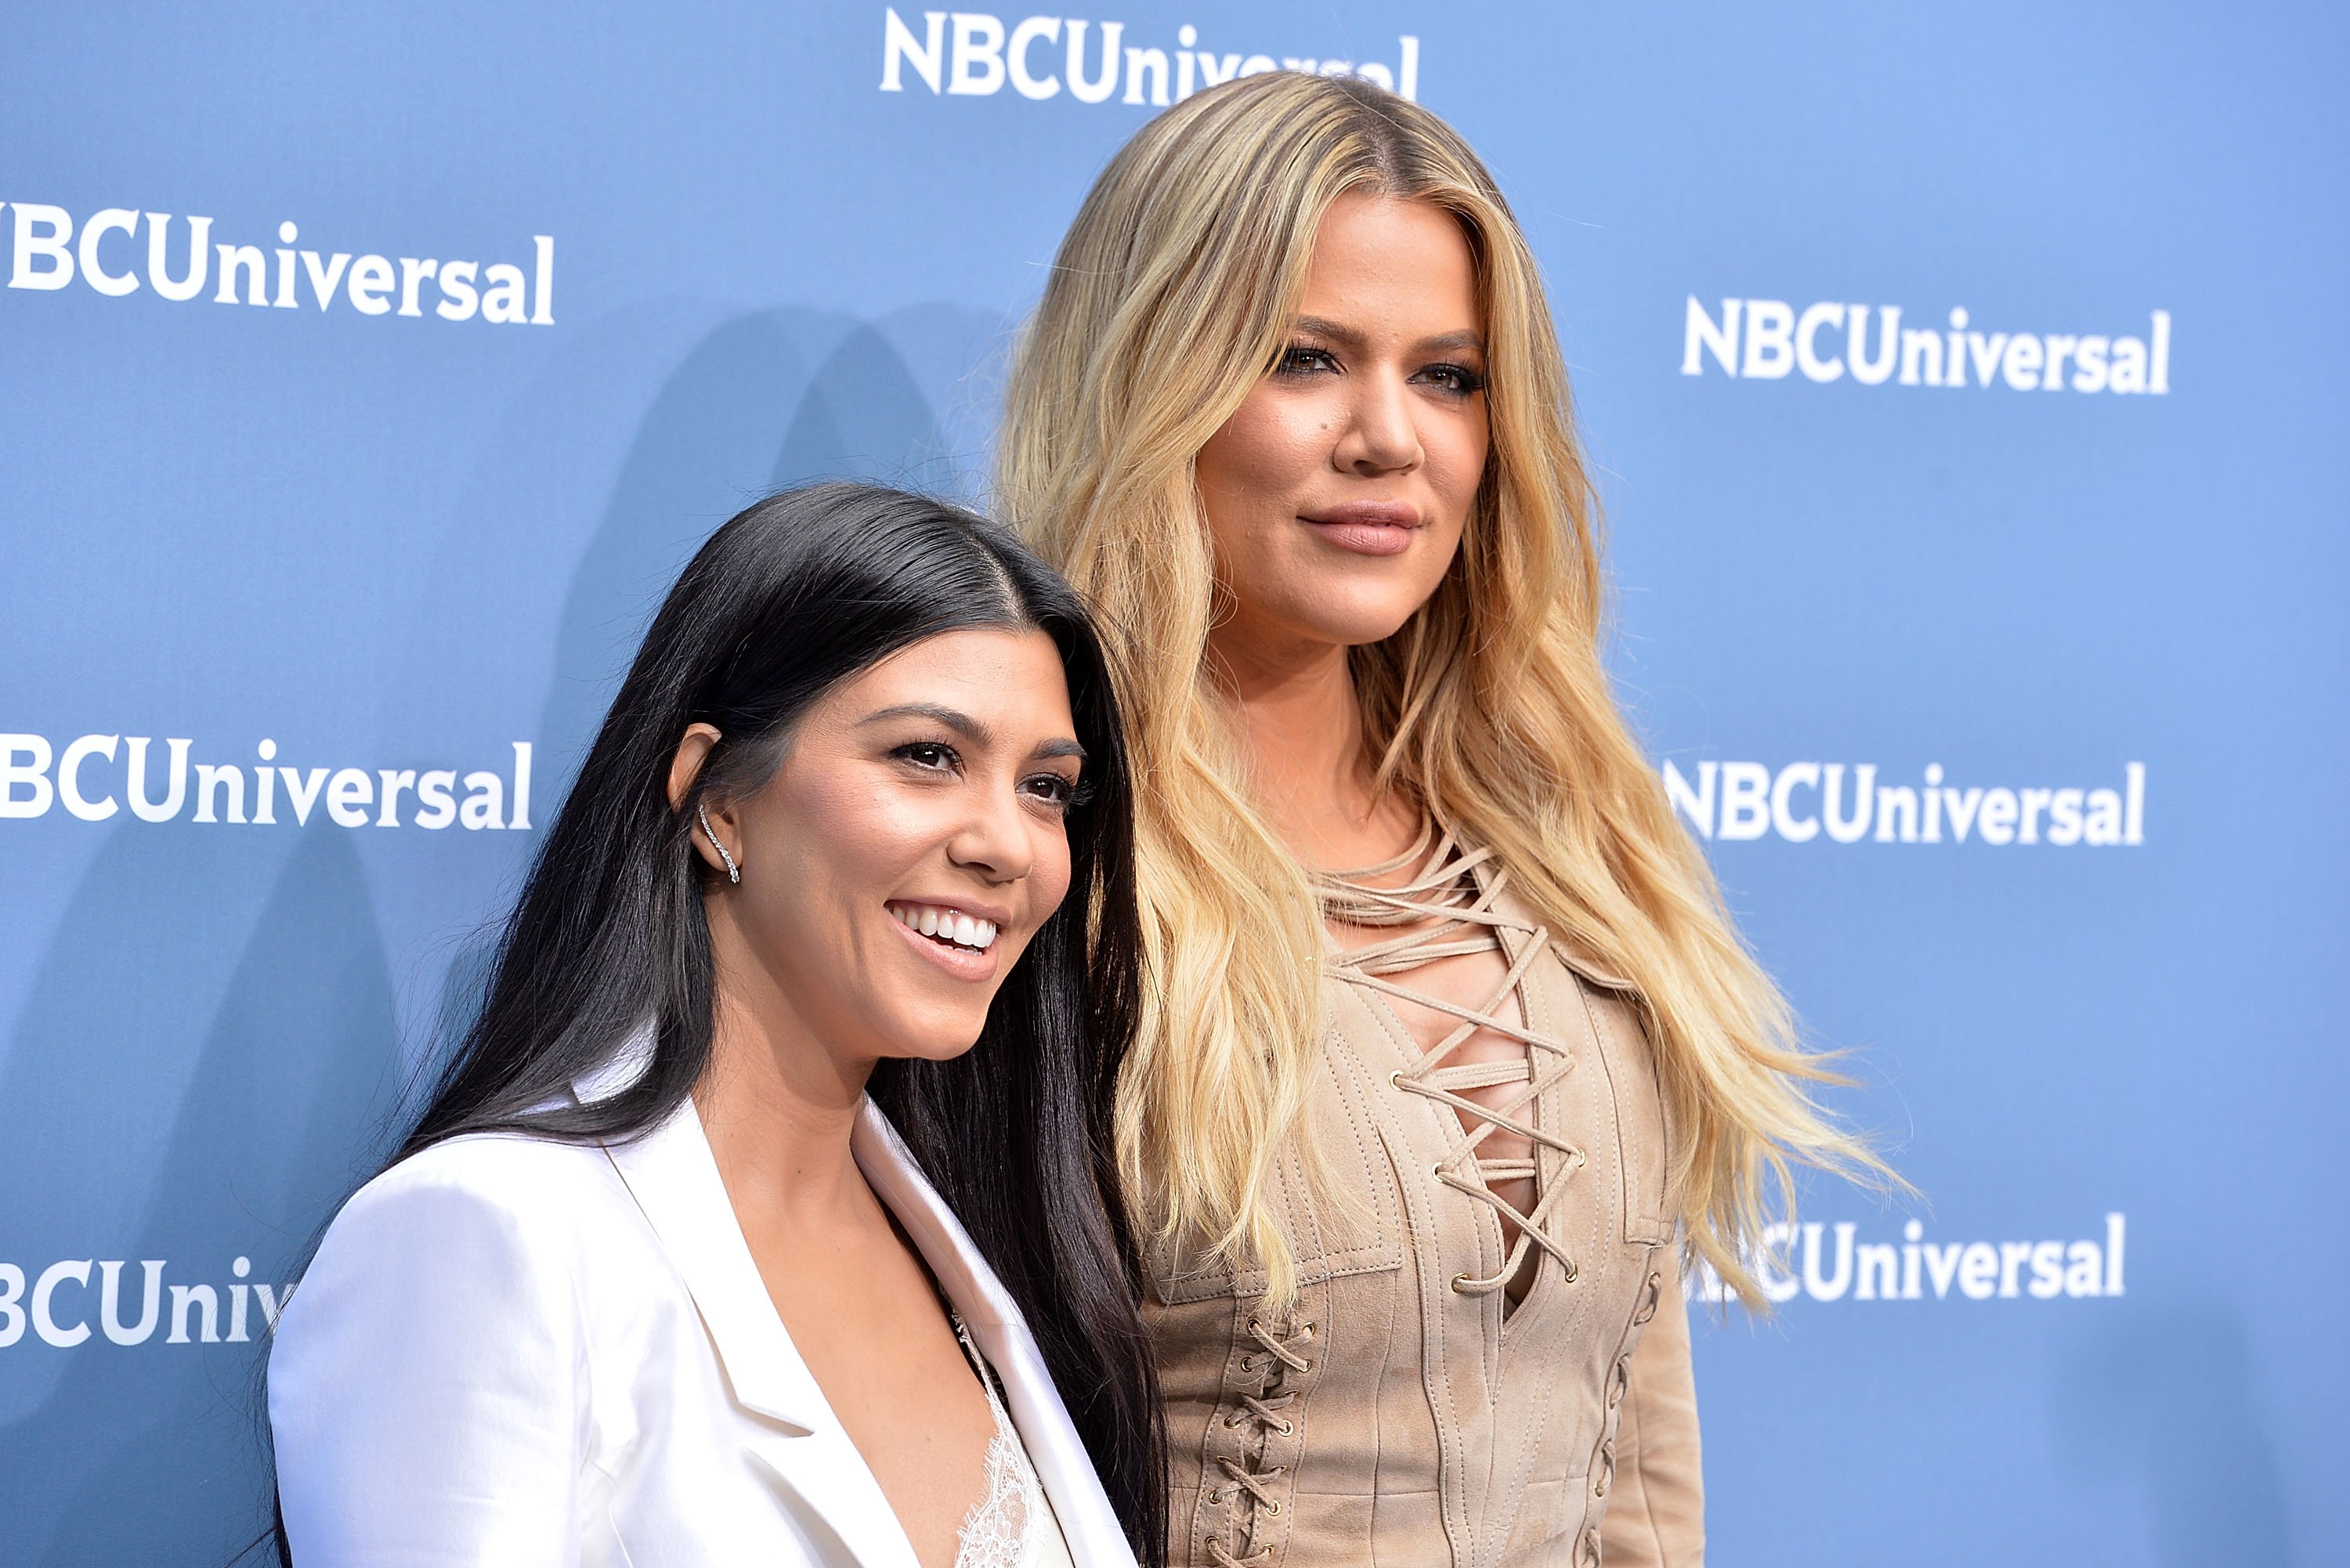 Kourtney Kardashian and Khloe Kardashian attend the NBCUniversal 2016 Upfront Presentation | Source: Getty Images